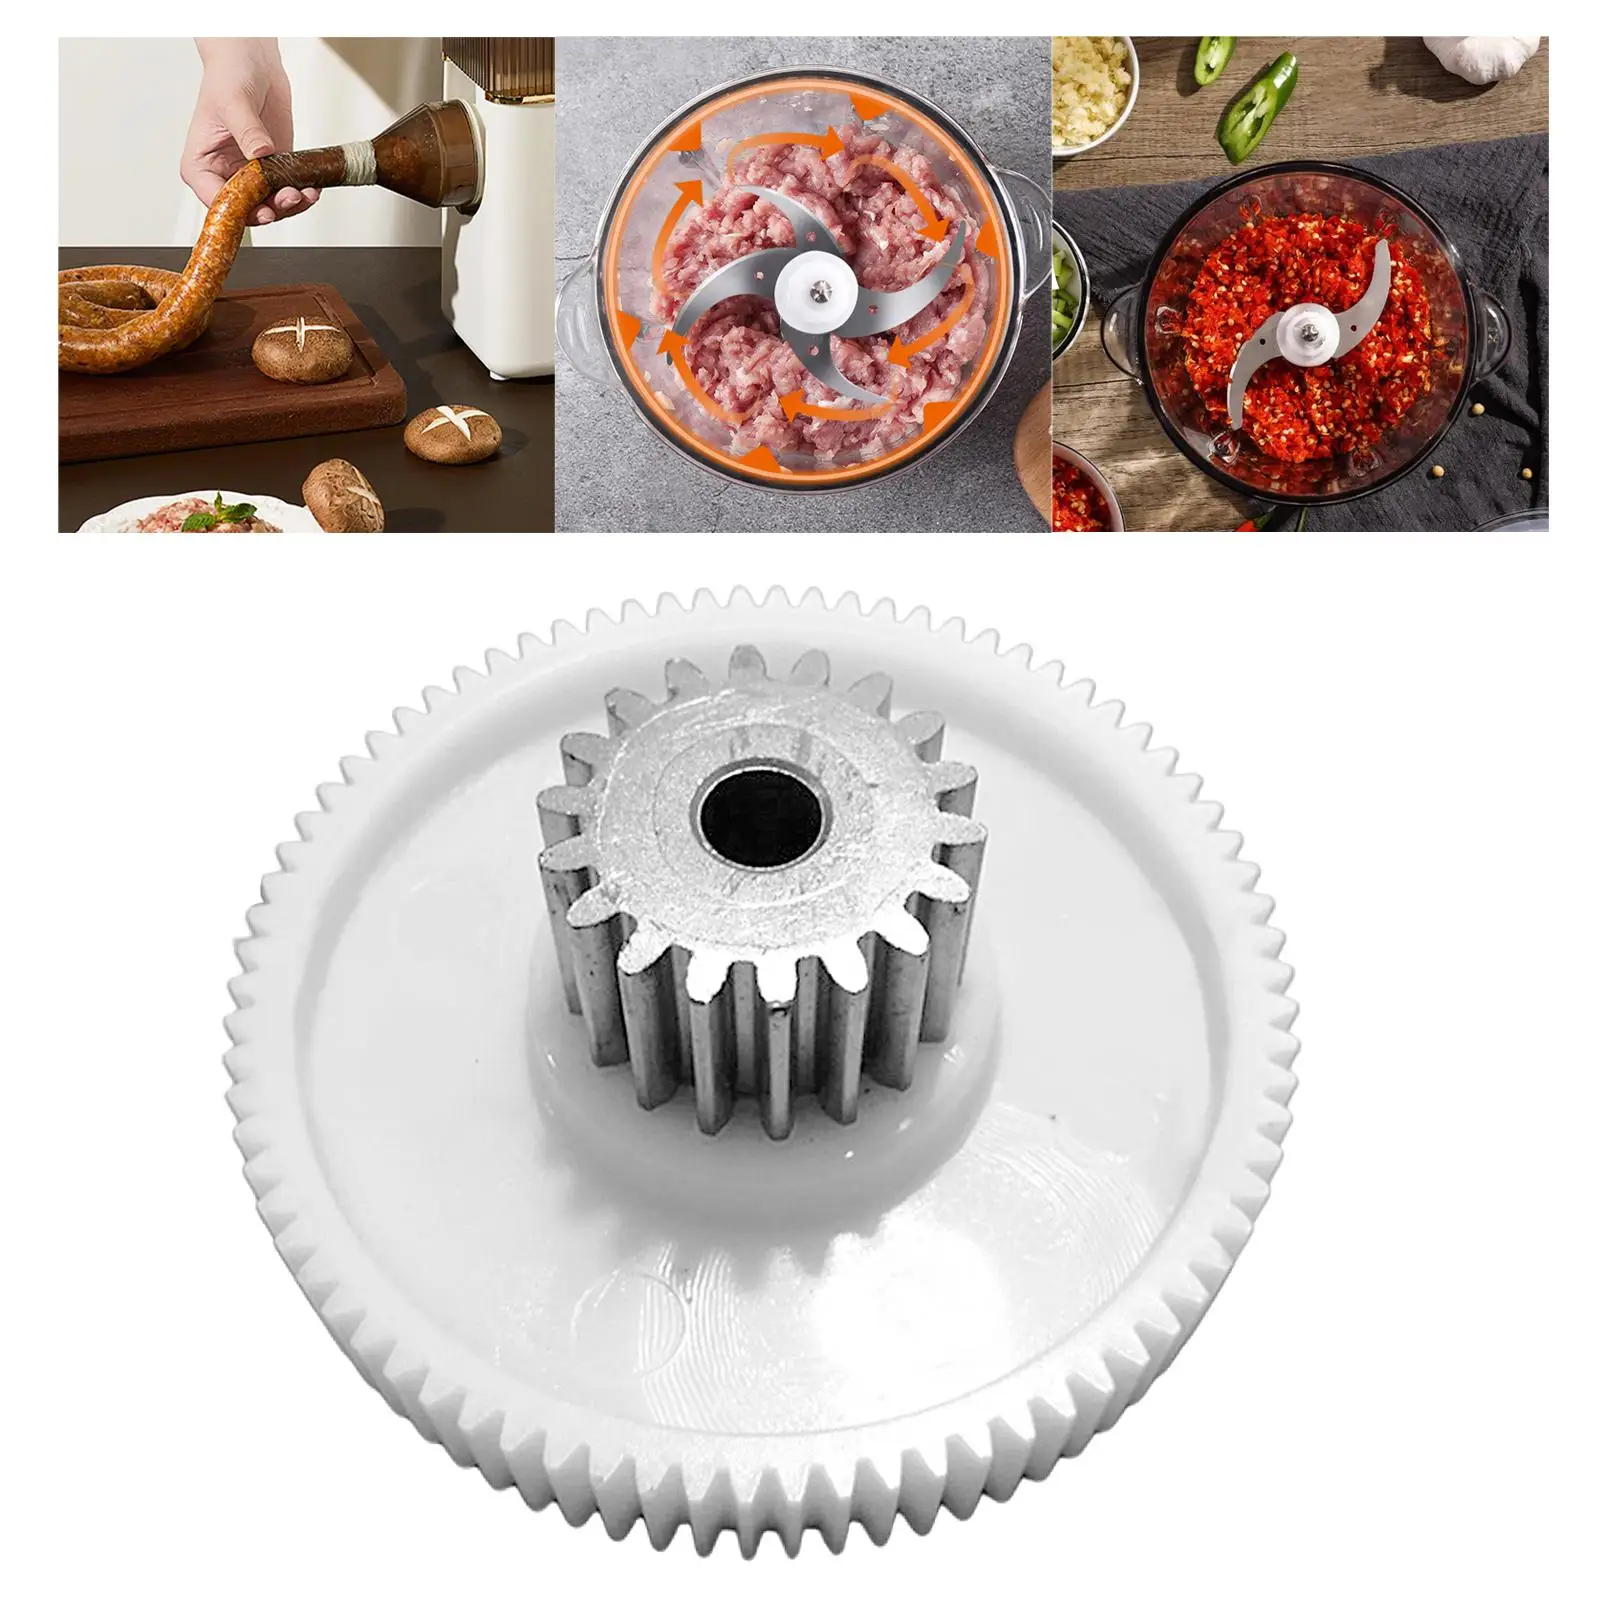 Plastic Sausage Stuffer Chili Processor Gear,Meat Grinder Mincer Gear,Electric Meat Grinder Part Gear for Kitchen Dining Parts